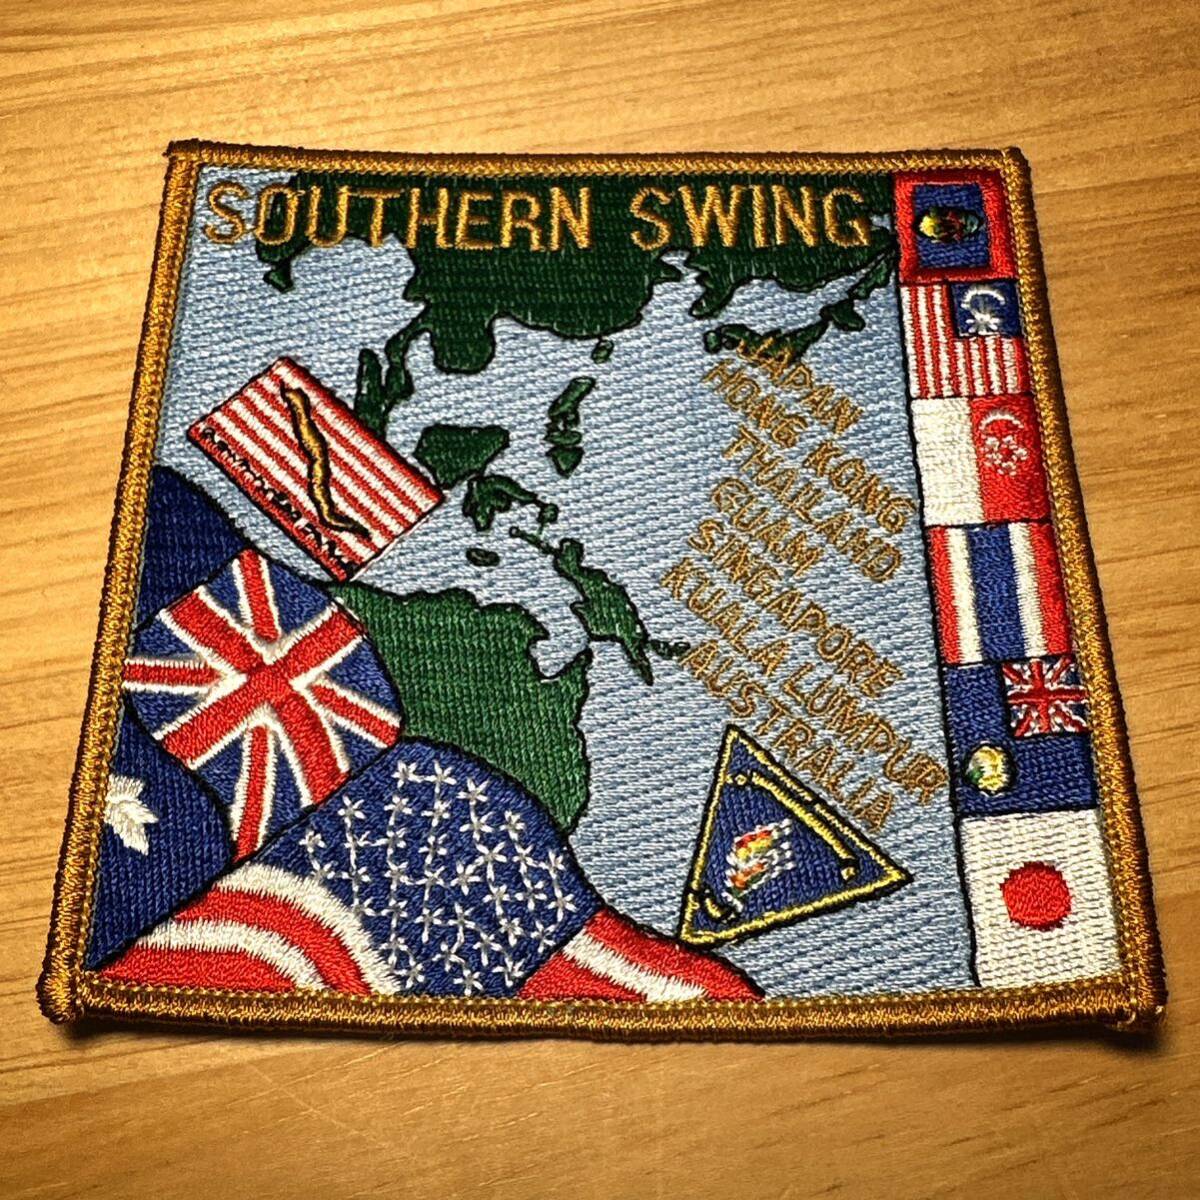 Southern swing パッチ ワッペン の画像1